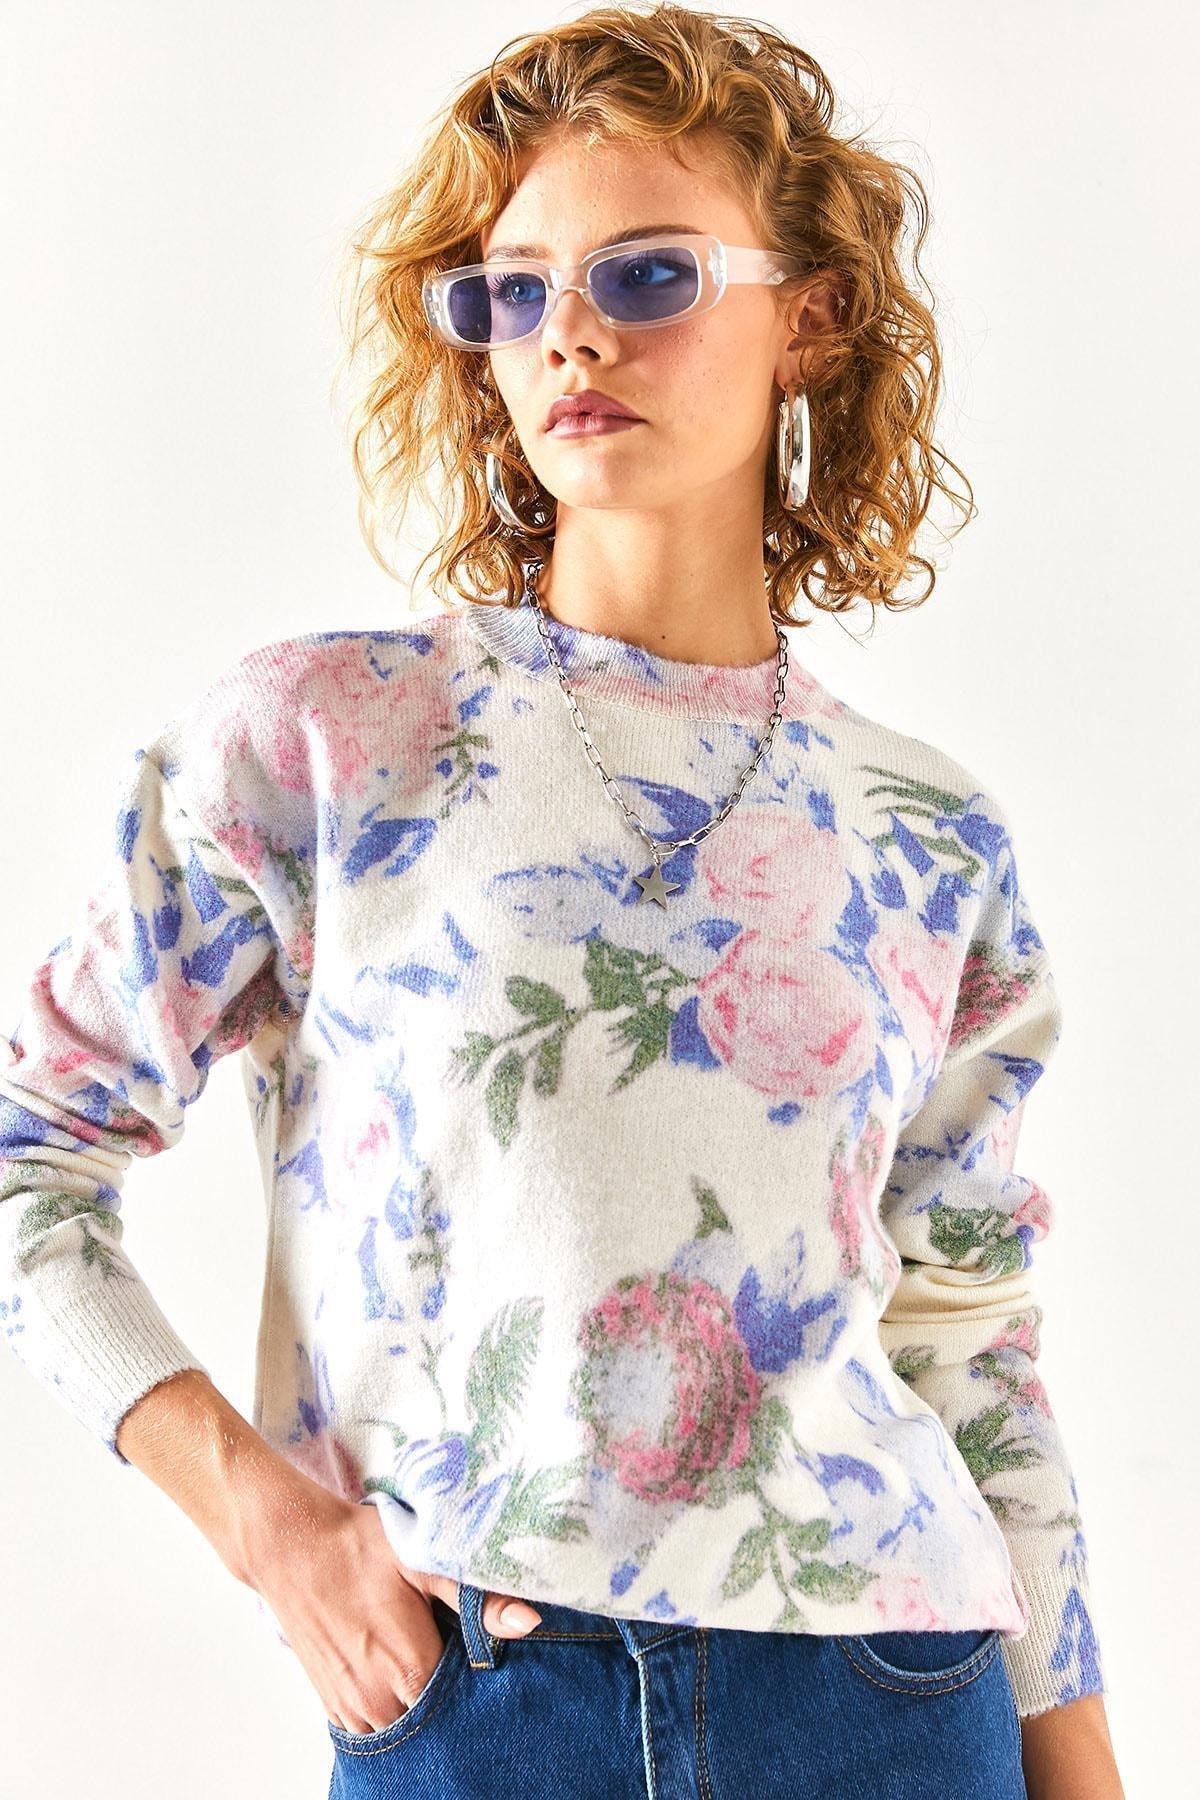 Olalook - Multicolour Patterned Premium Knitwear Sweater